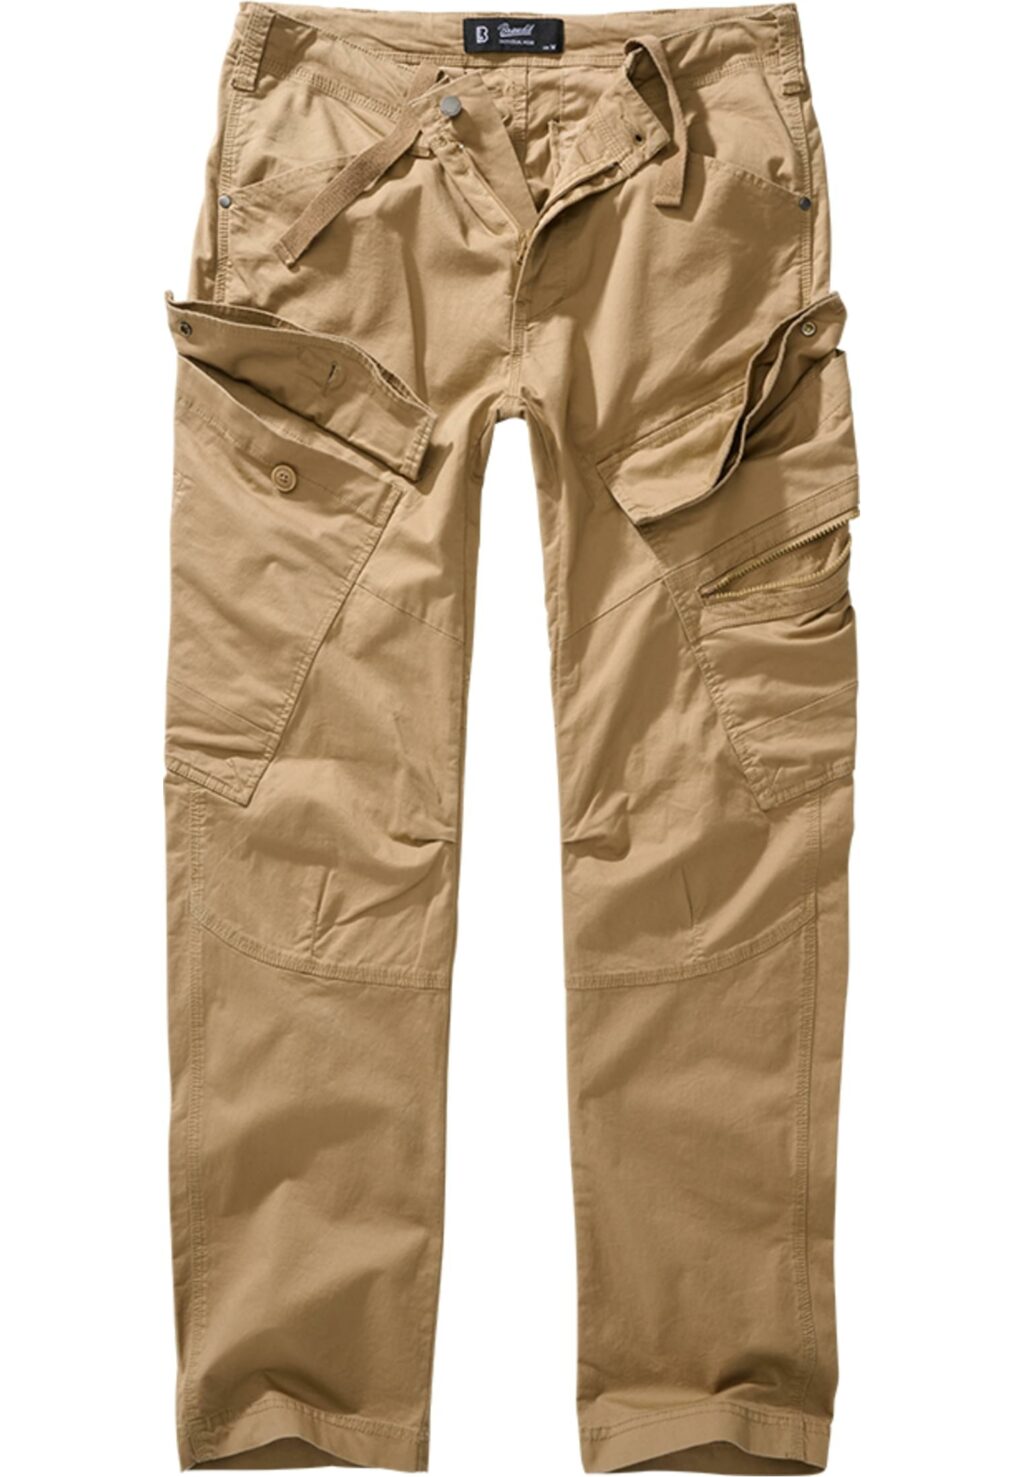 Brandit Adven Slim Fit Cargo Pants camel BD9470